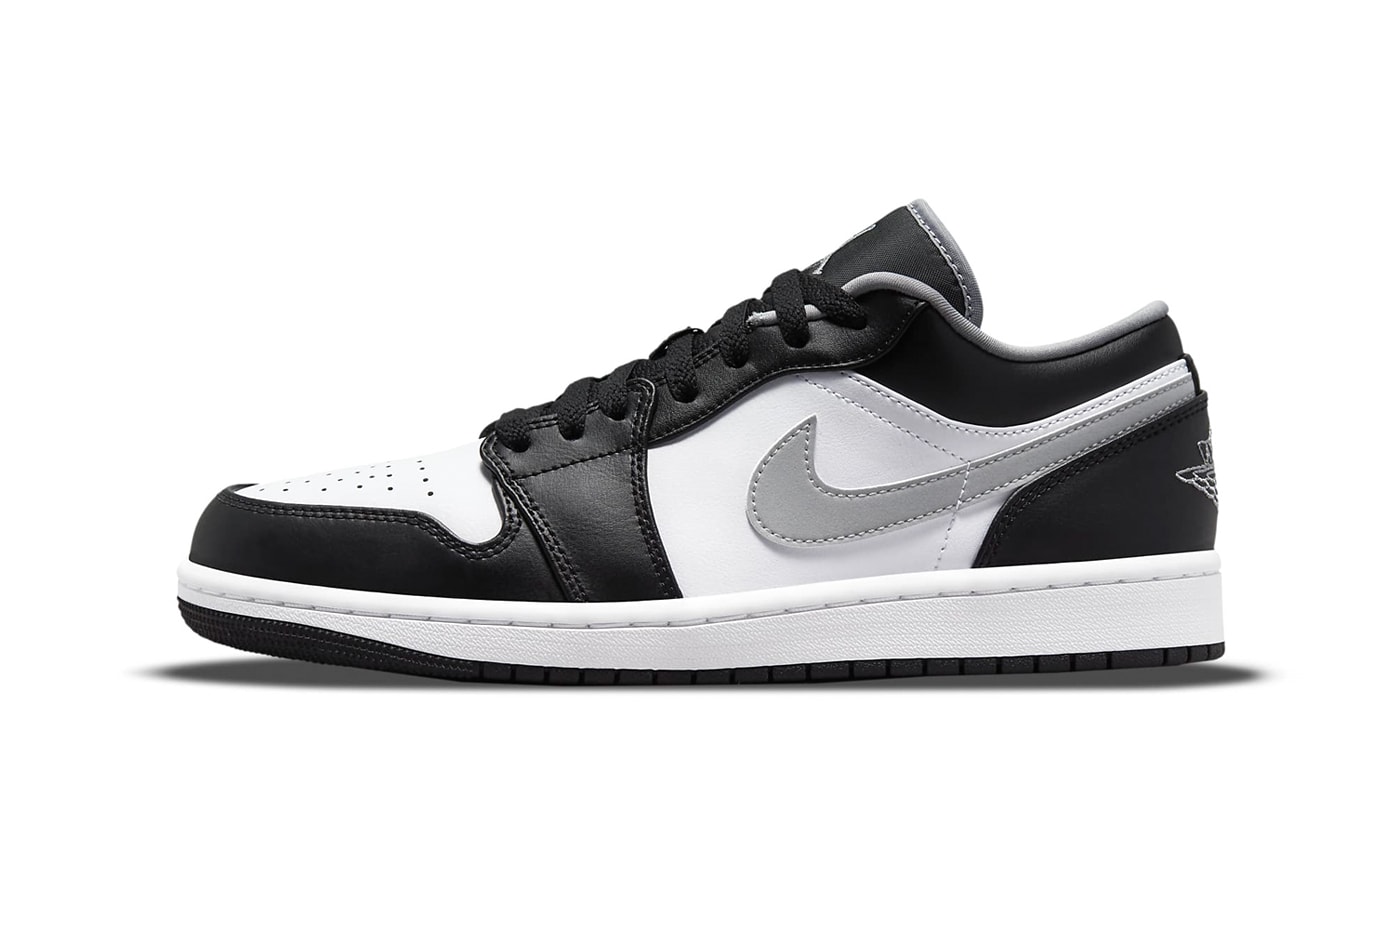 Nike Air Jordan 1 Low Shoe Black/White/Particle Grey 553558-040 Release 2021